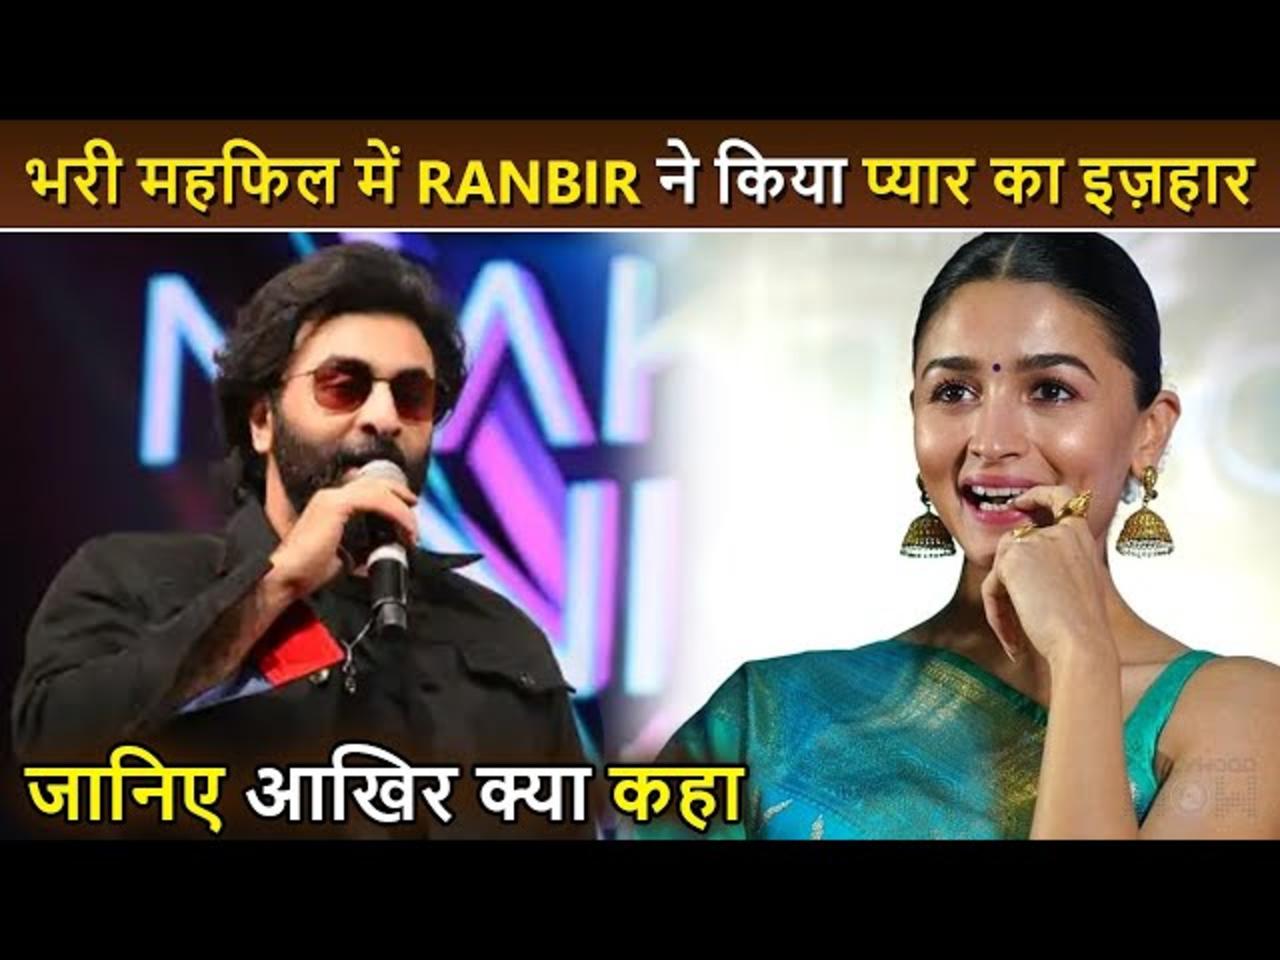 Ranbir Kapoor Wishes Happy Valentine's Day To Wife Alia and Baby Raha On Stage